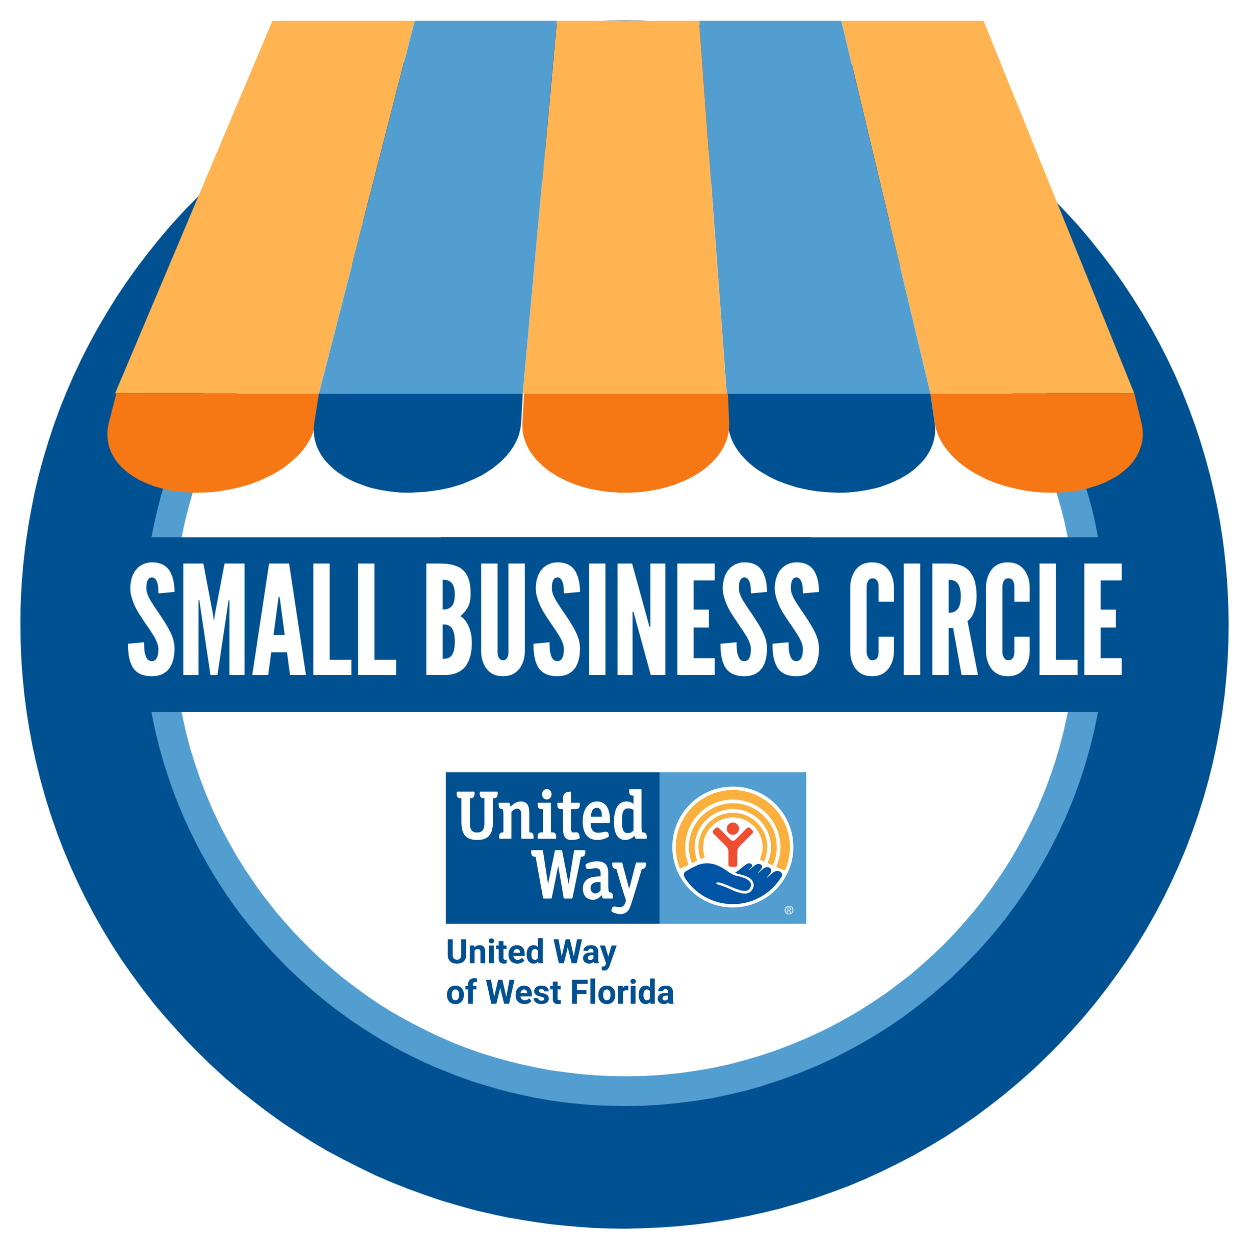 Small Business Circle logo